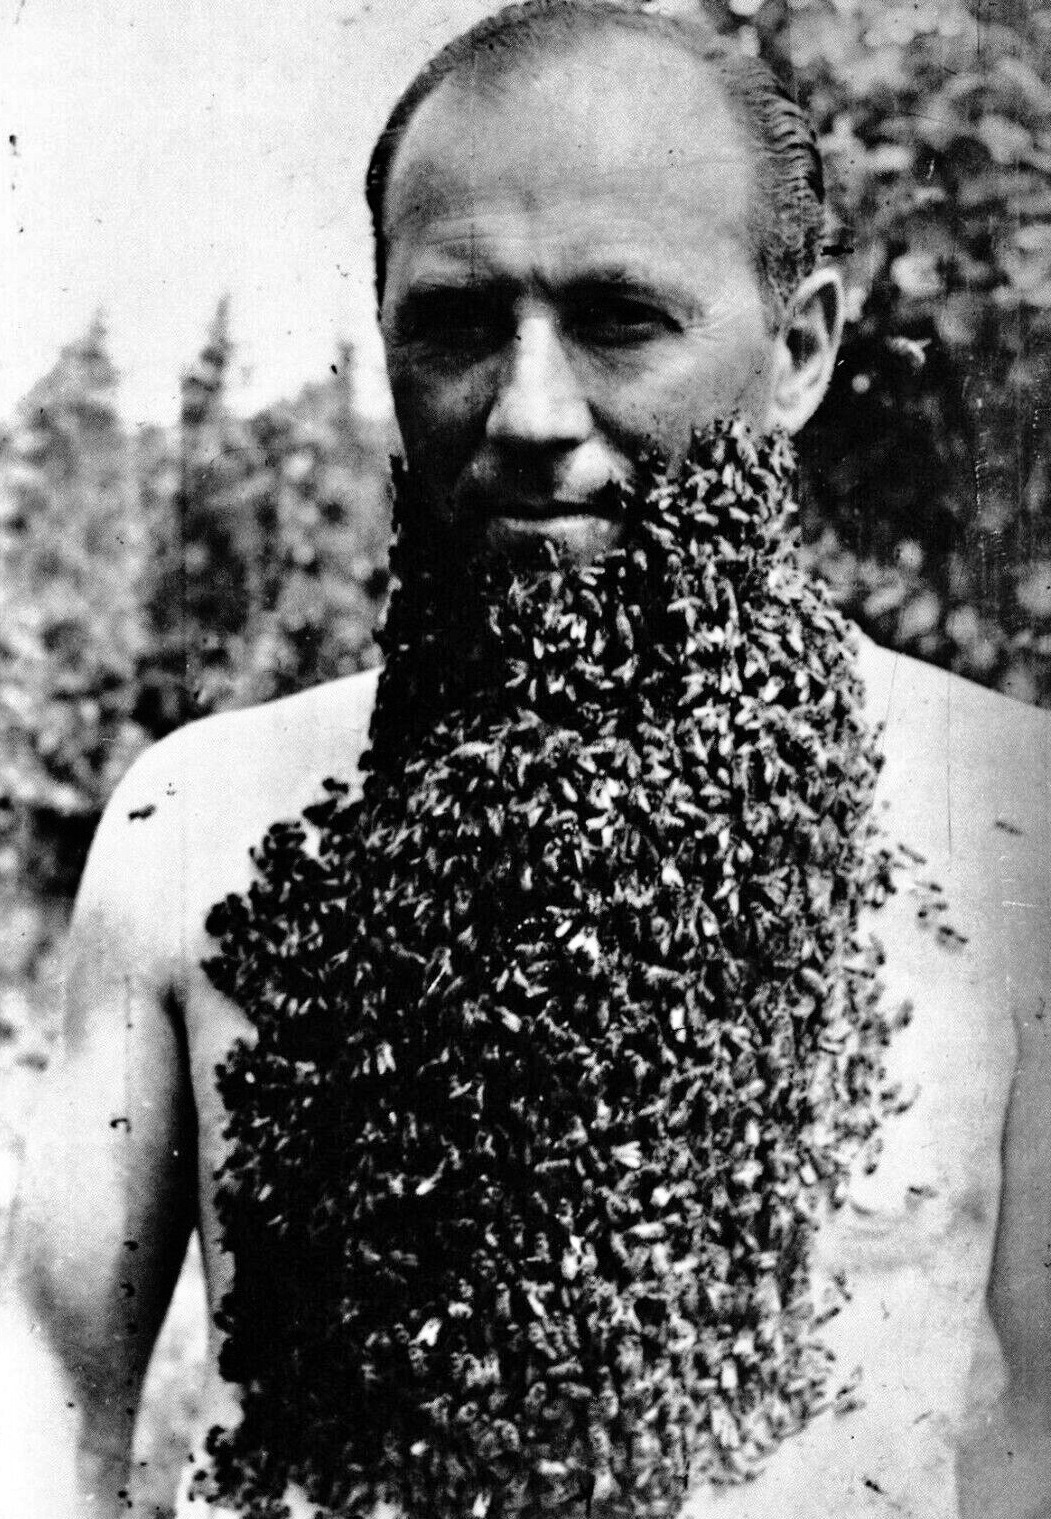 Barbe abeilles, Celeste Antoniucci de Mar del Plata, Argentine, 1960.